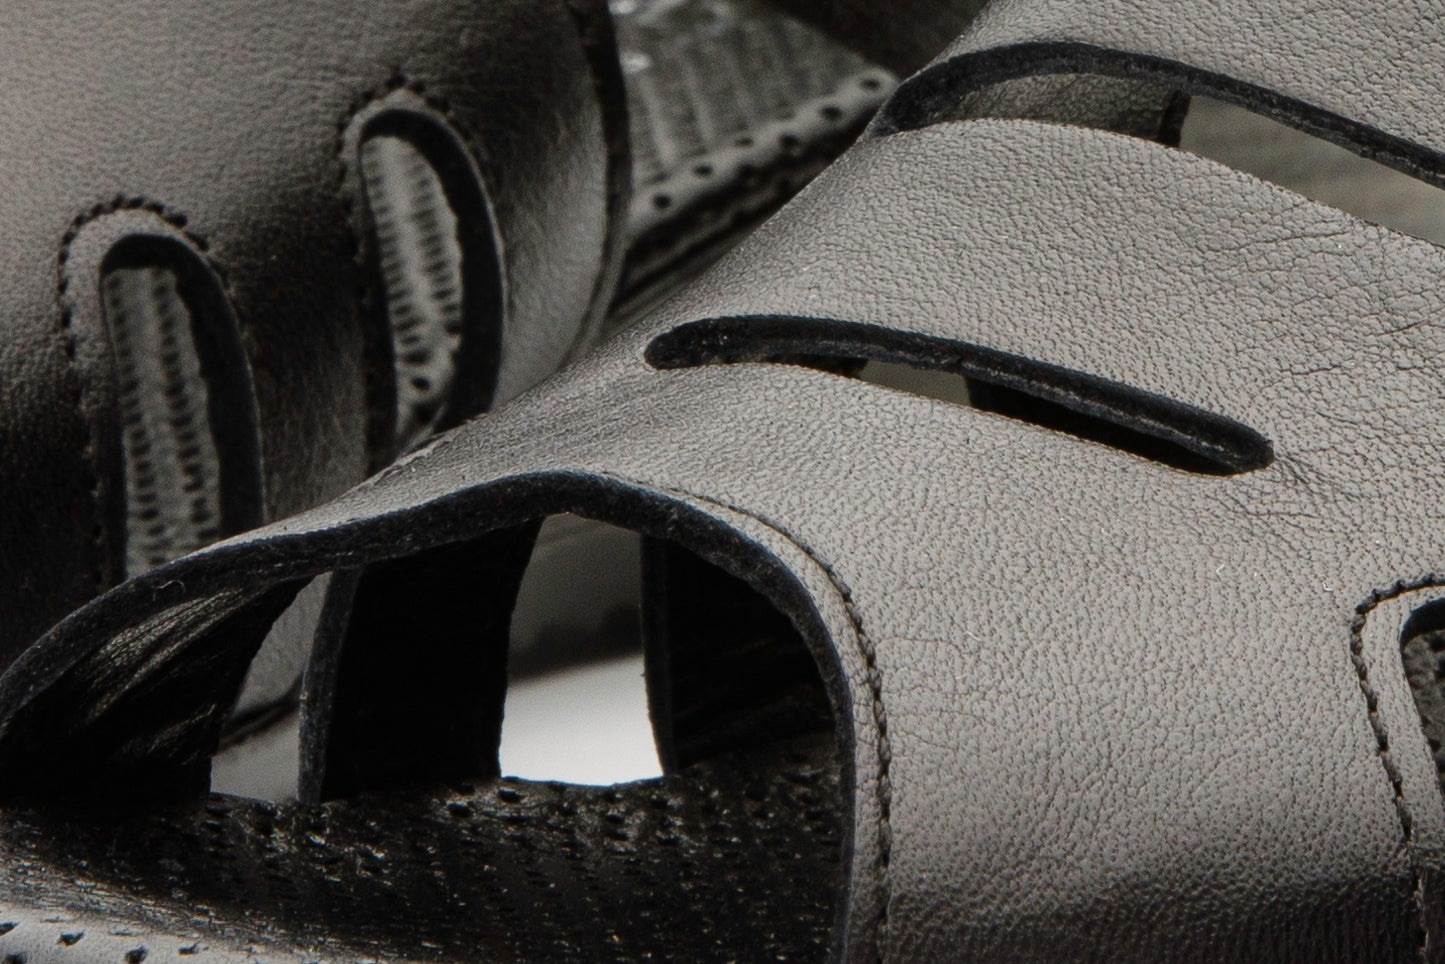 The Atina Black Leather Sandal Final Sale!